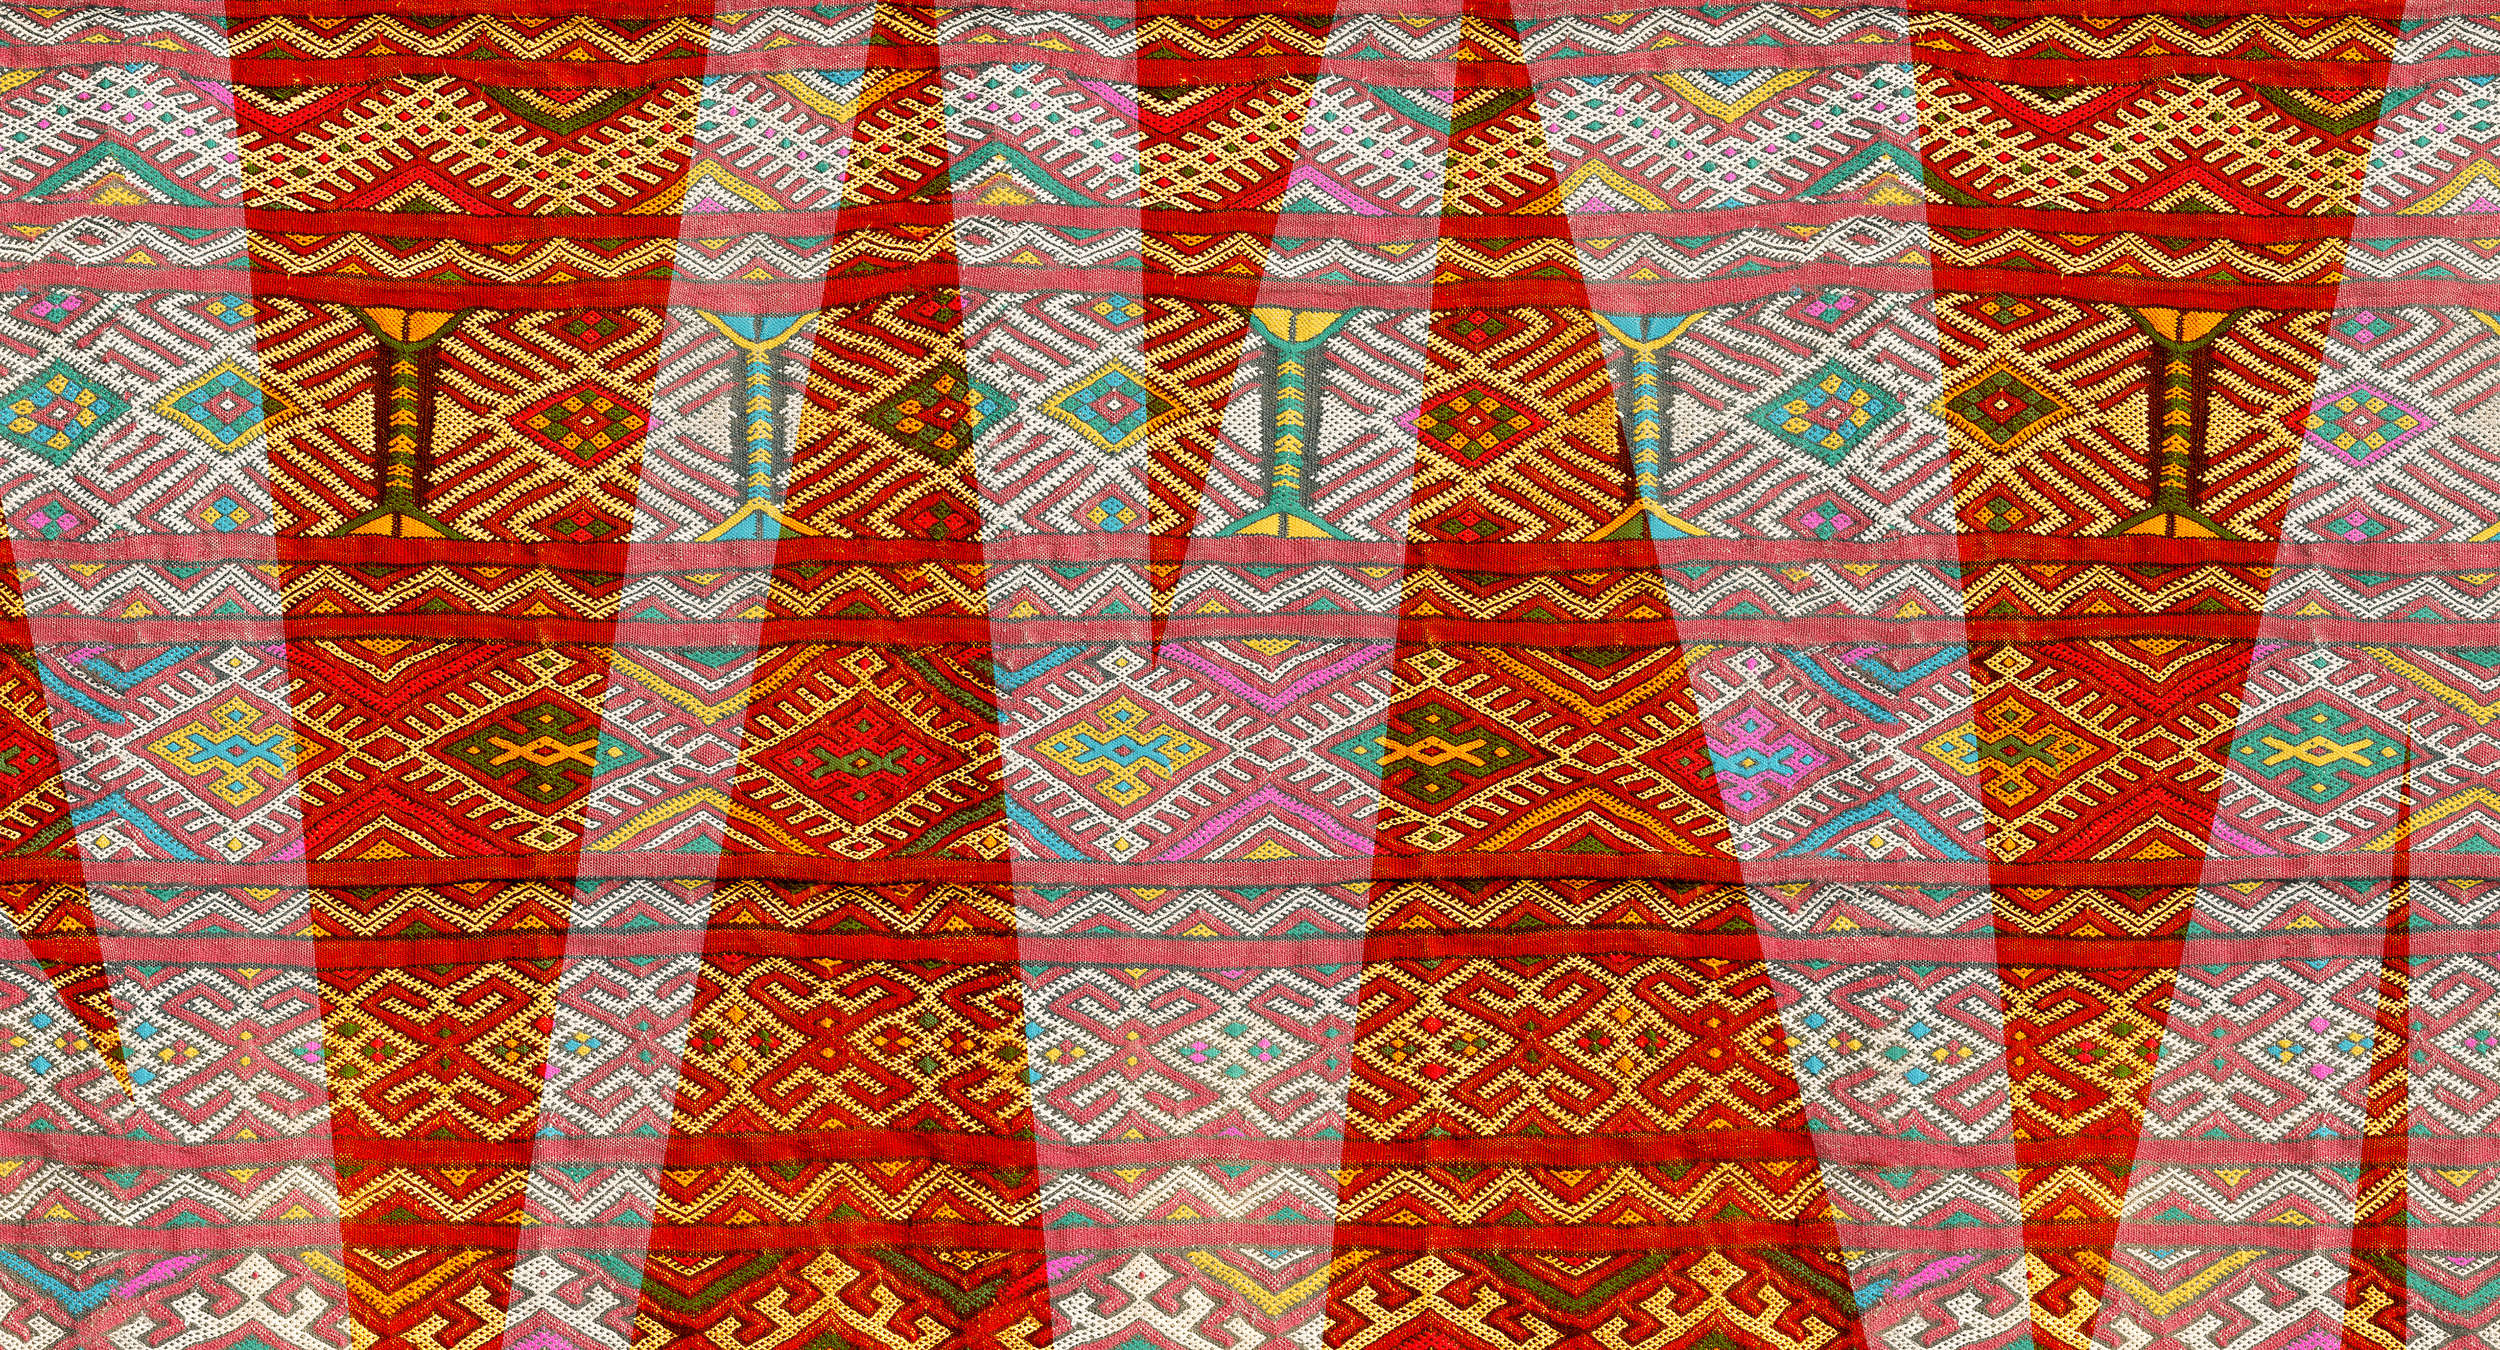             Carta da parati etnica con design tessile e motivo a trama - Rosso, verde, bianco
        